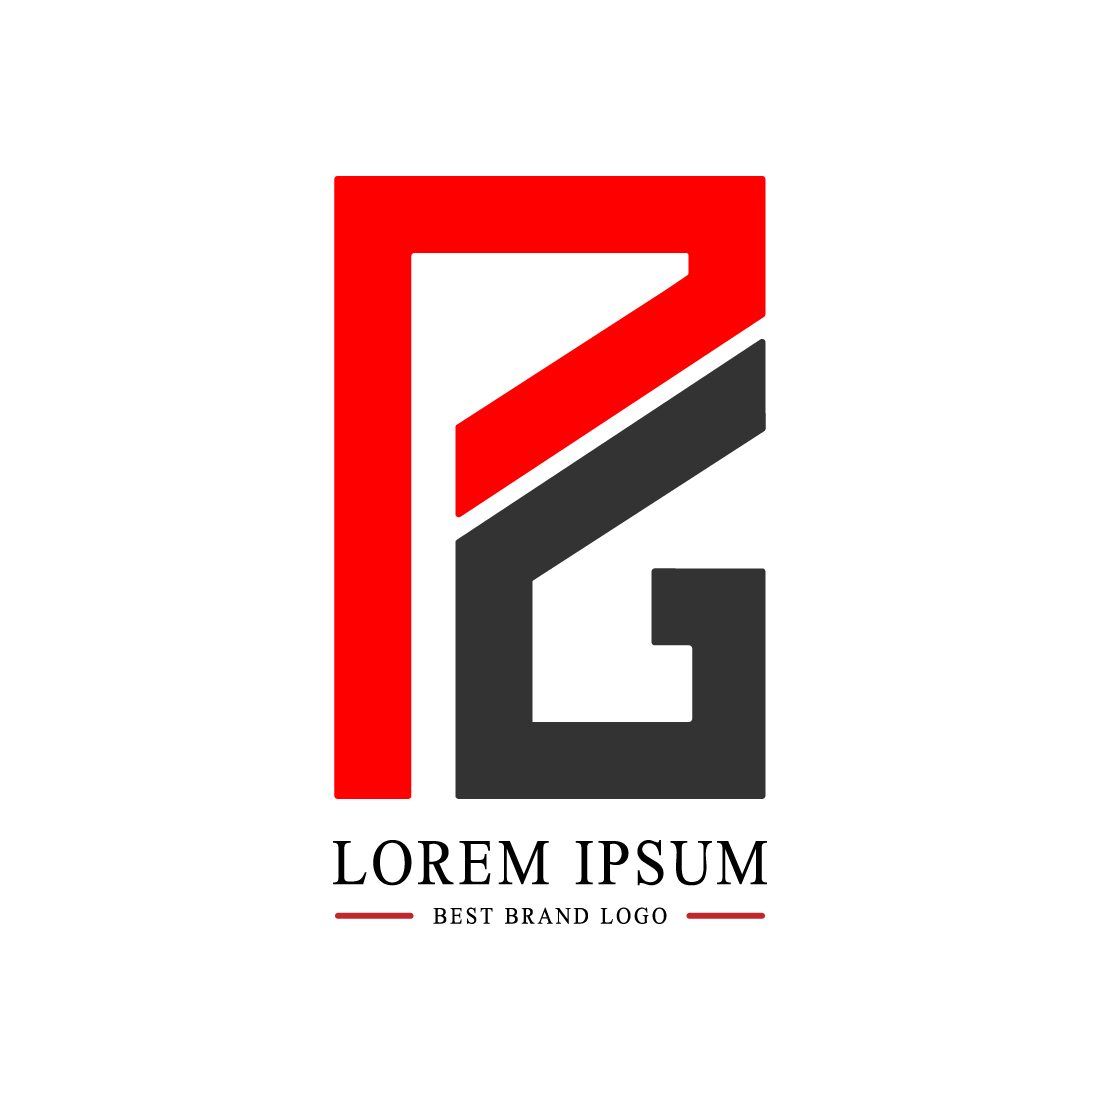 Initials PG letters logo design vector images design PG logo red and black color royalty GP logo design company template illustration preview image.